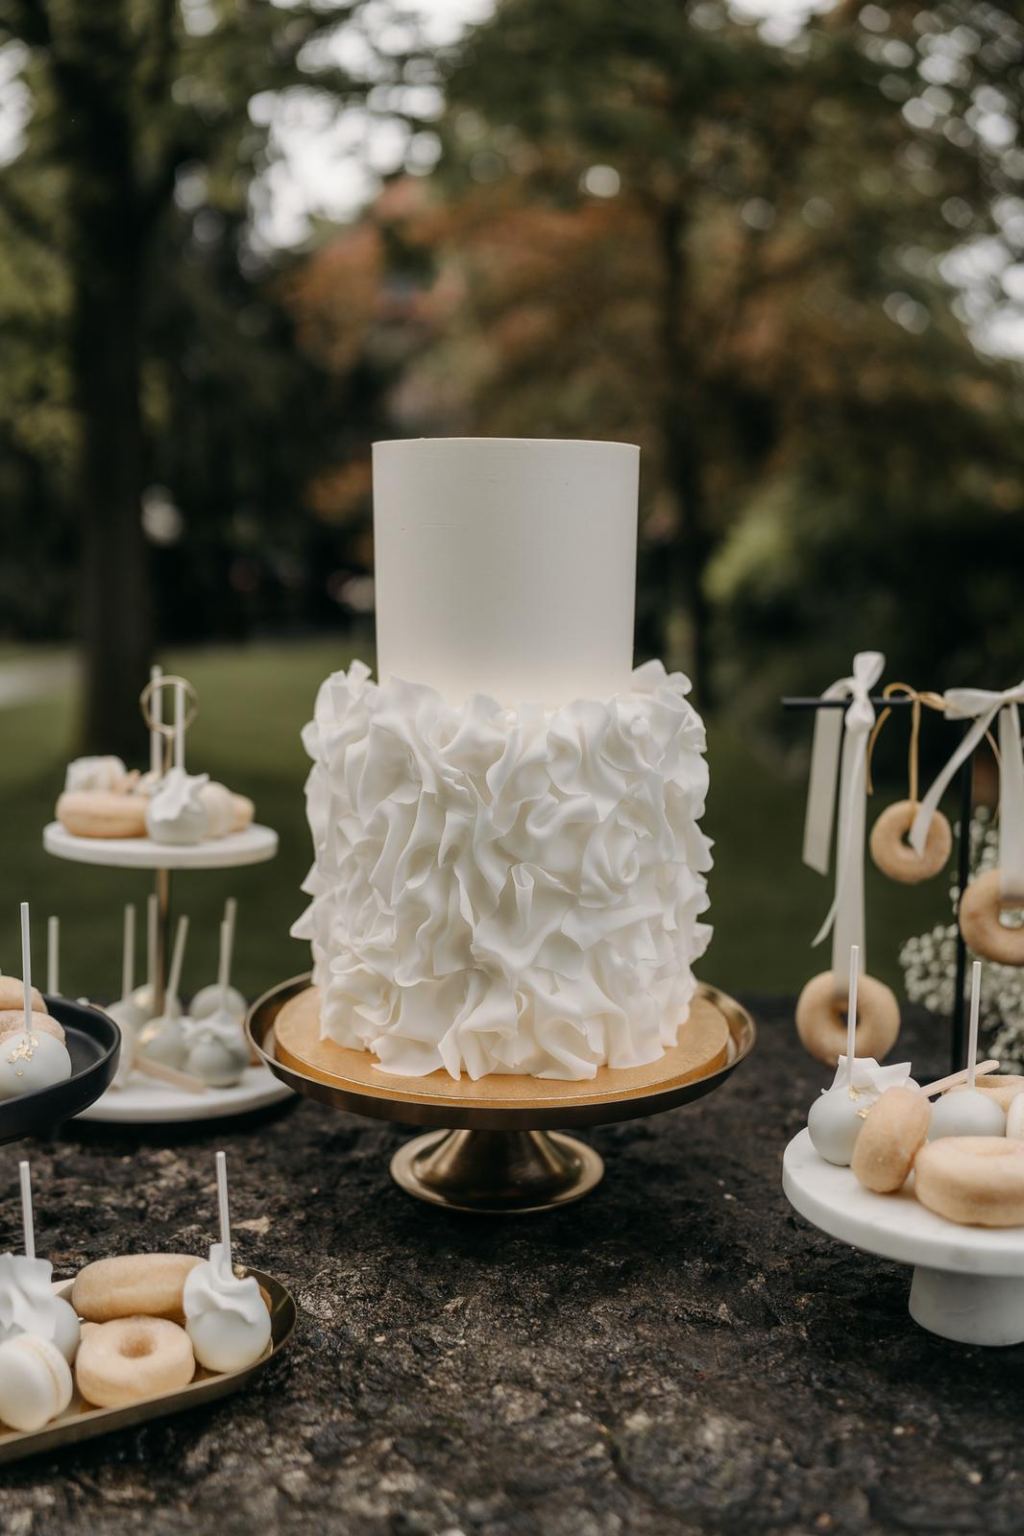 Design Cakes & Sweets by Kathi Winkler